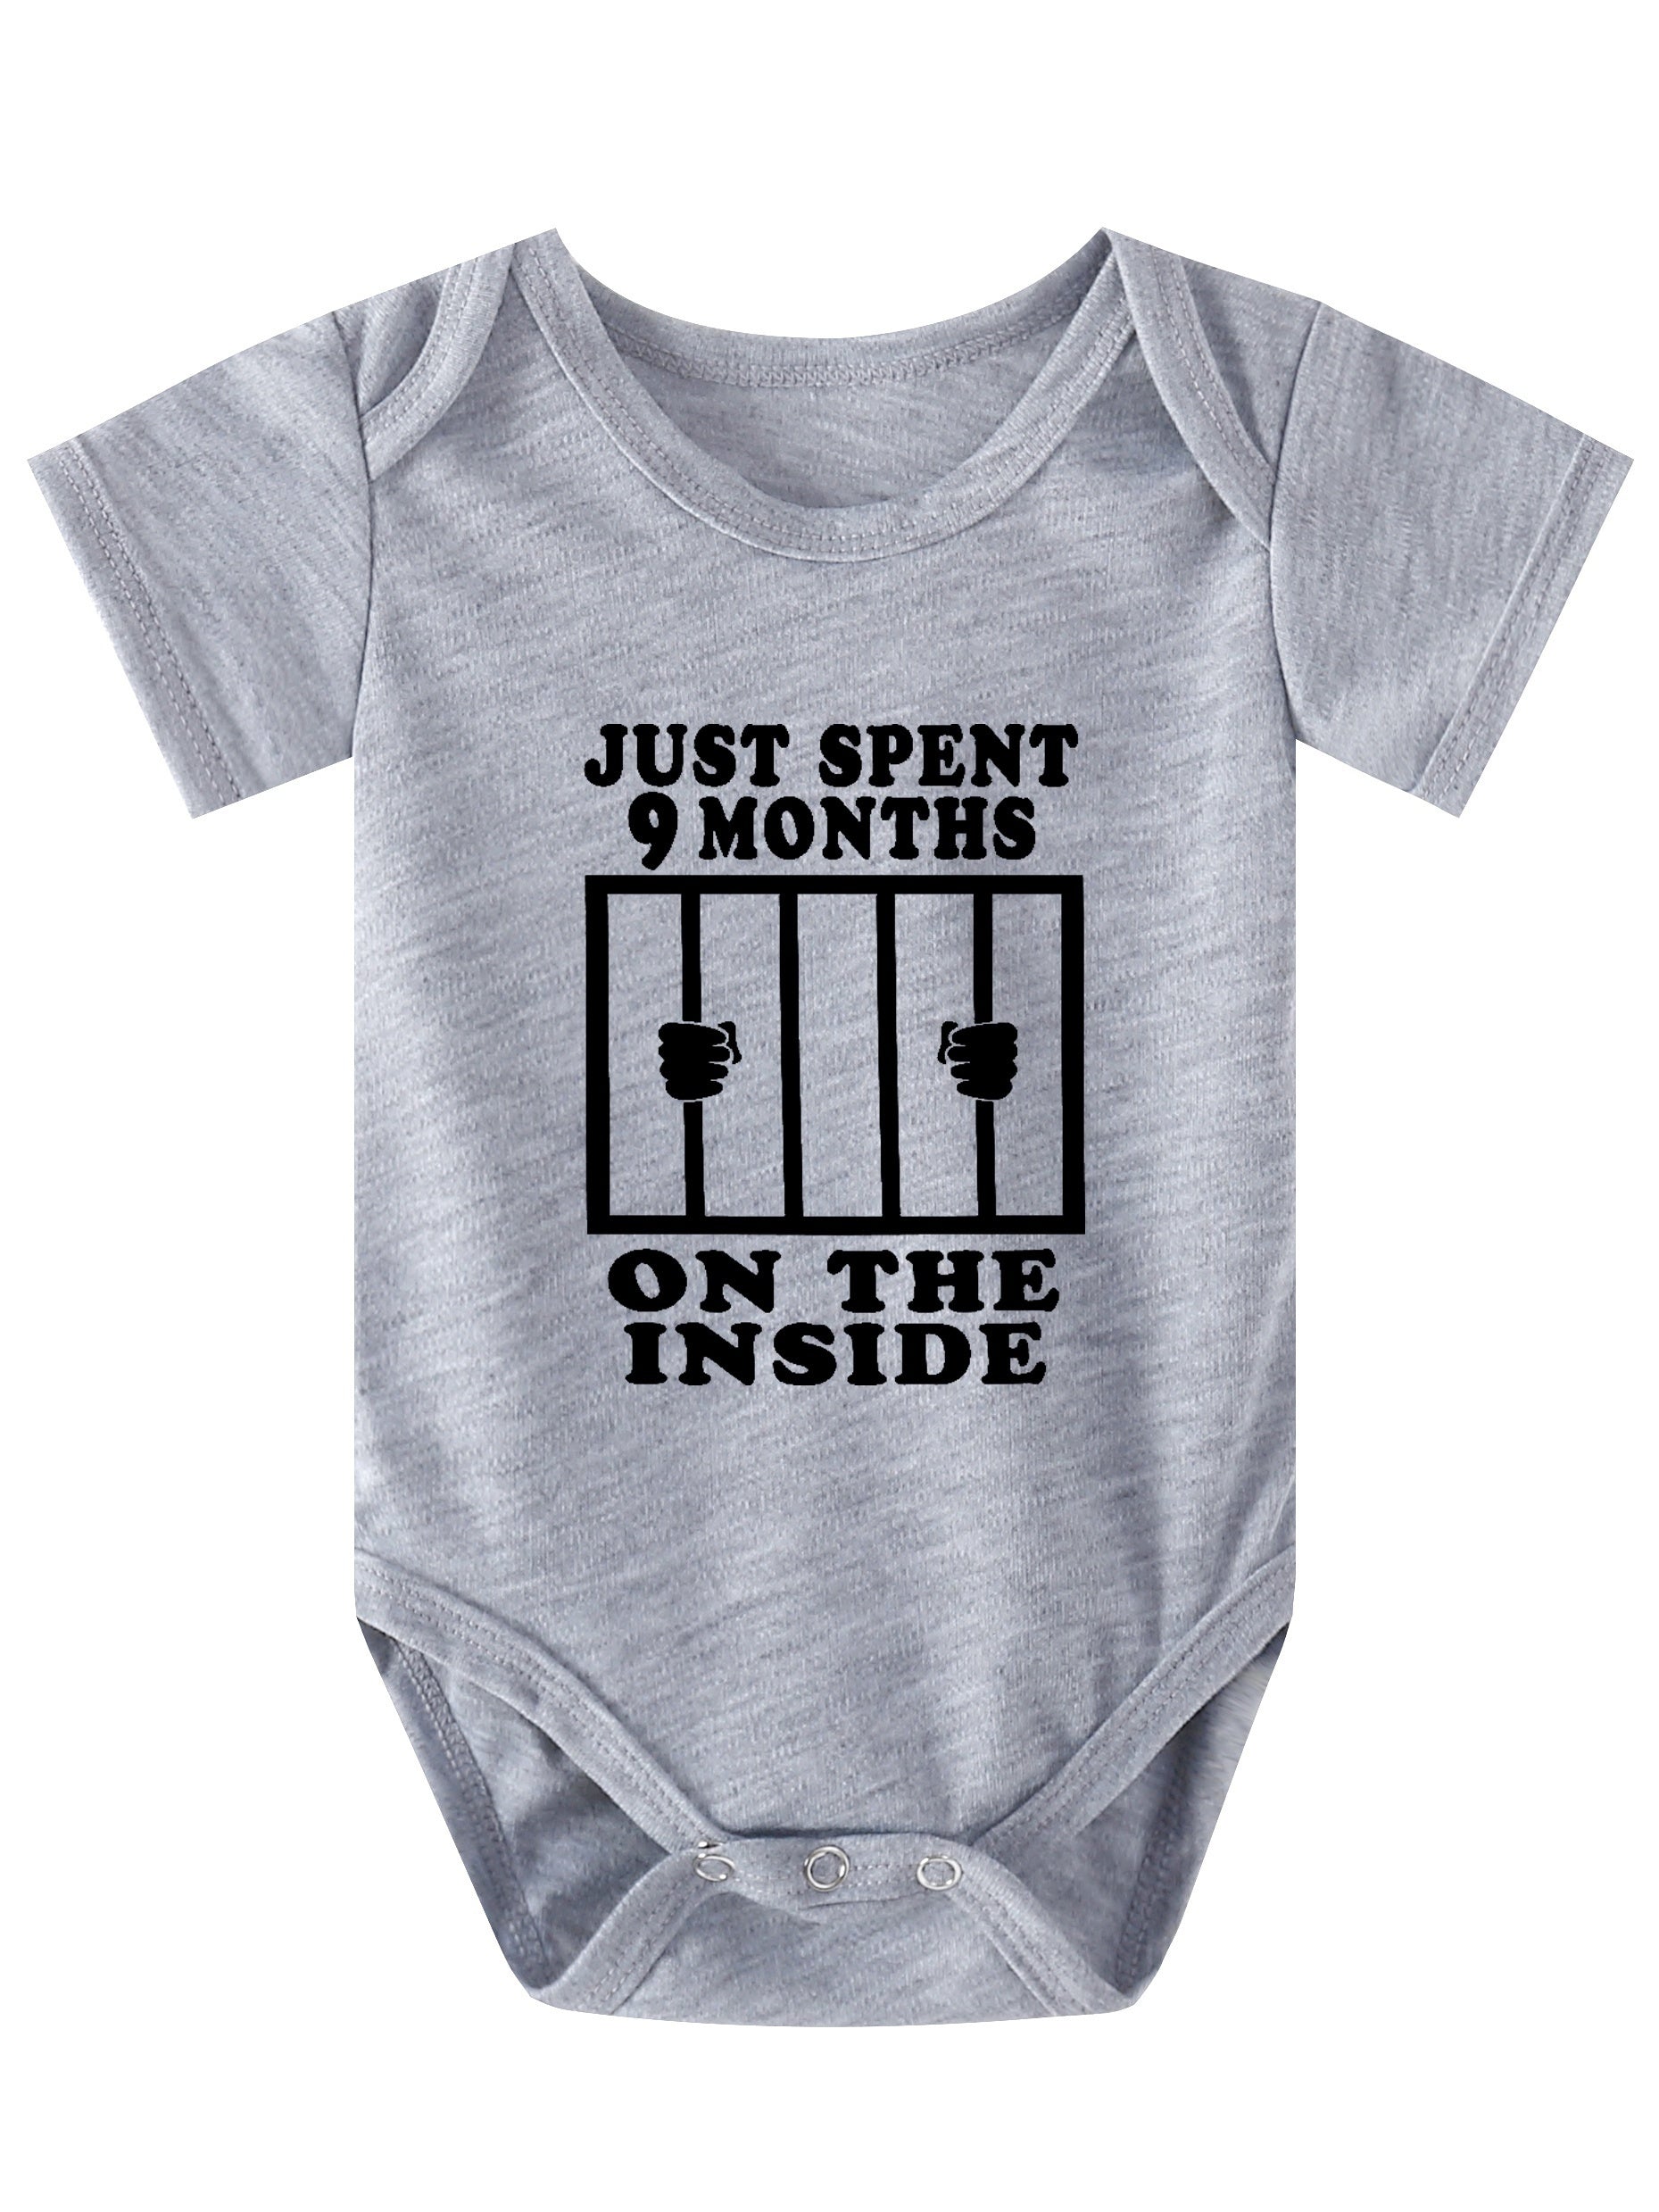 JUST SPENT 9 MONTHS ON THE INSIDE Christian Baby Onesie claimedbygoddesigns